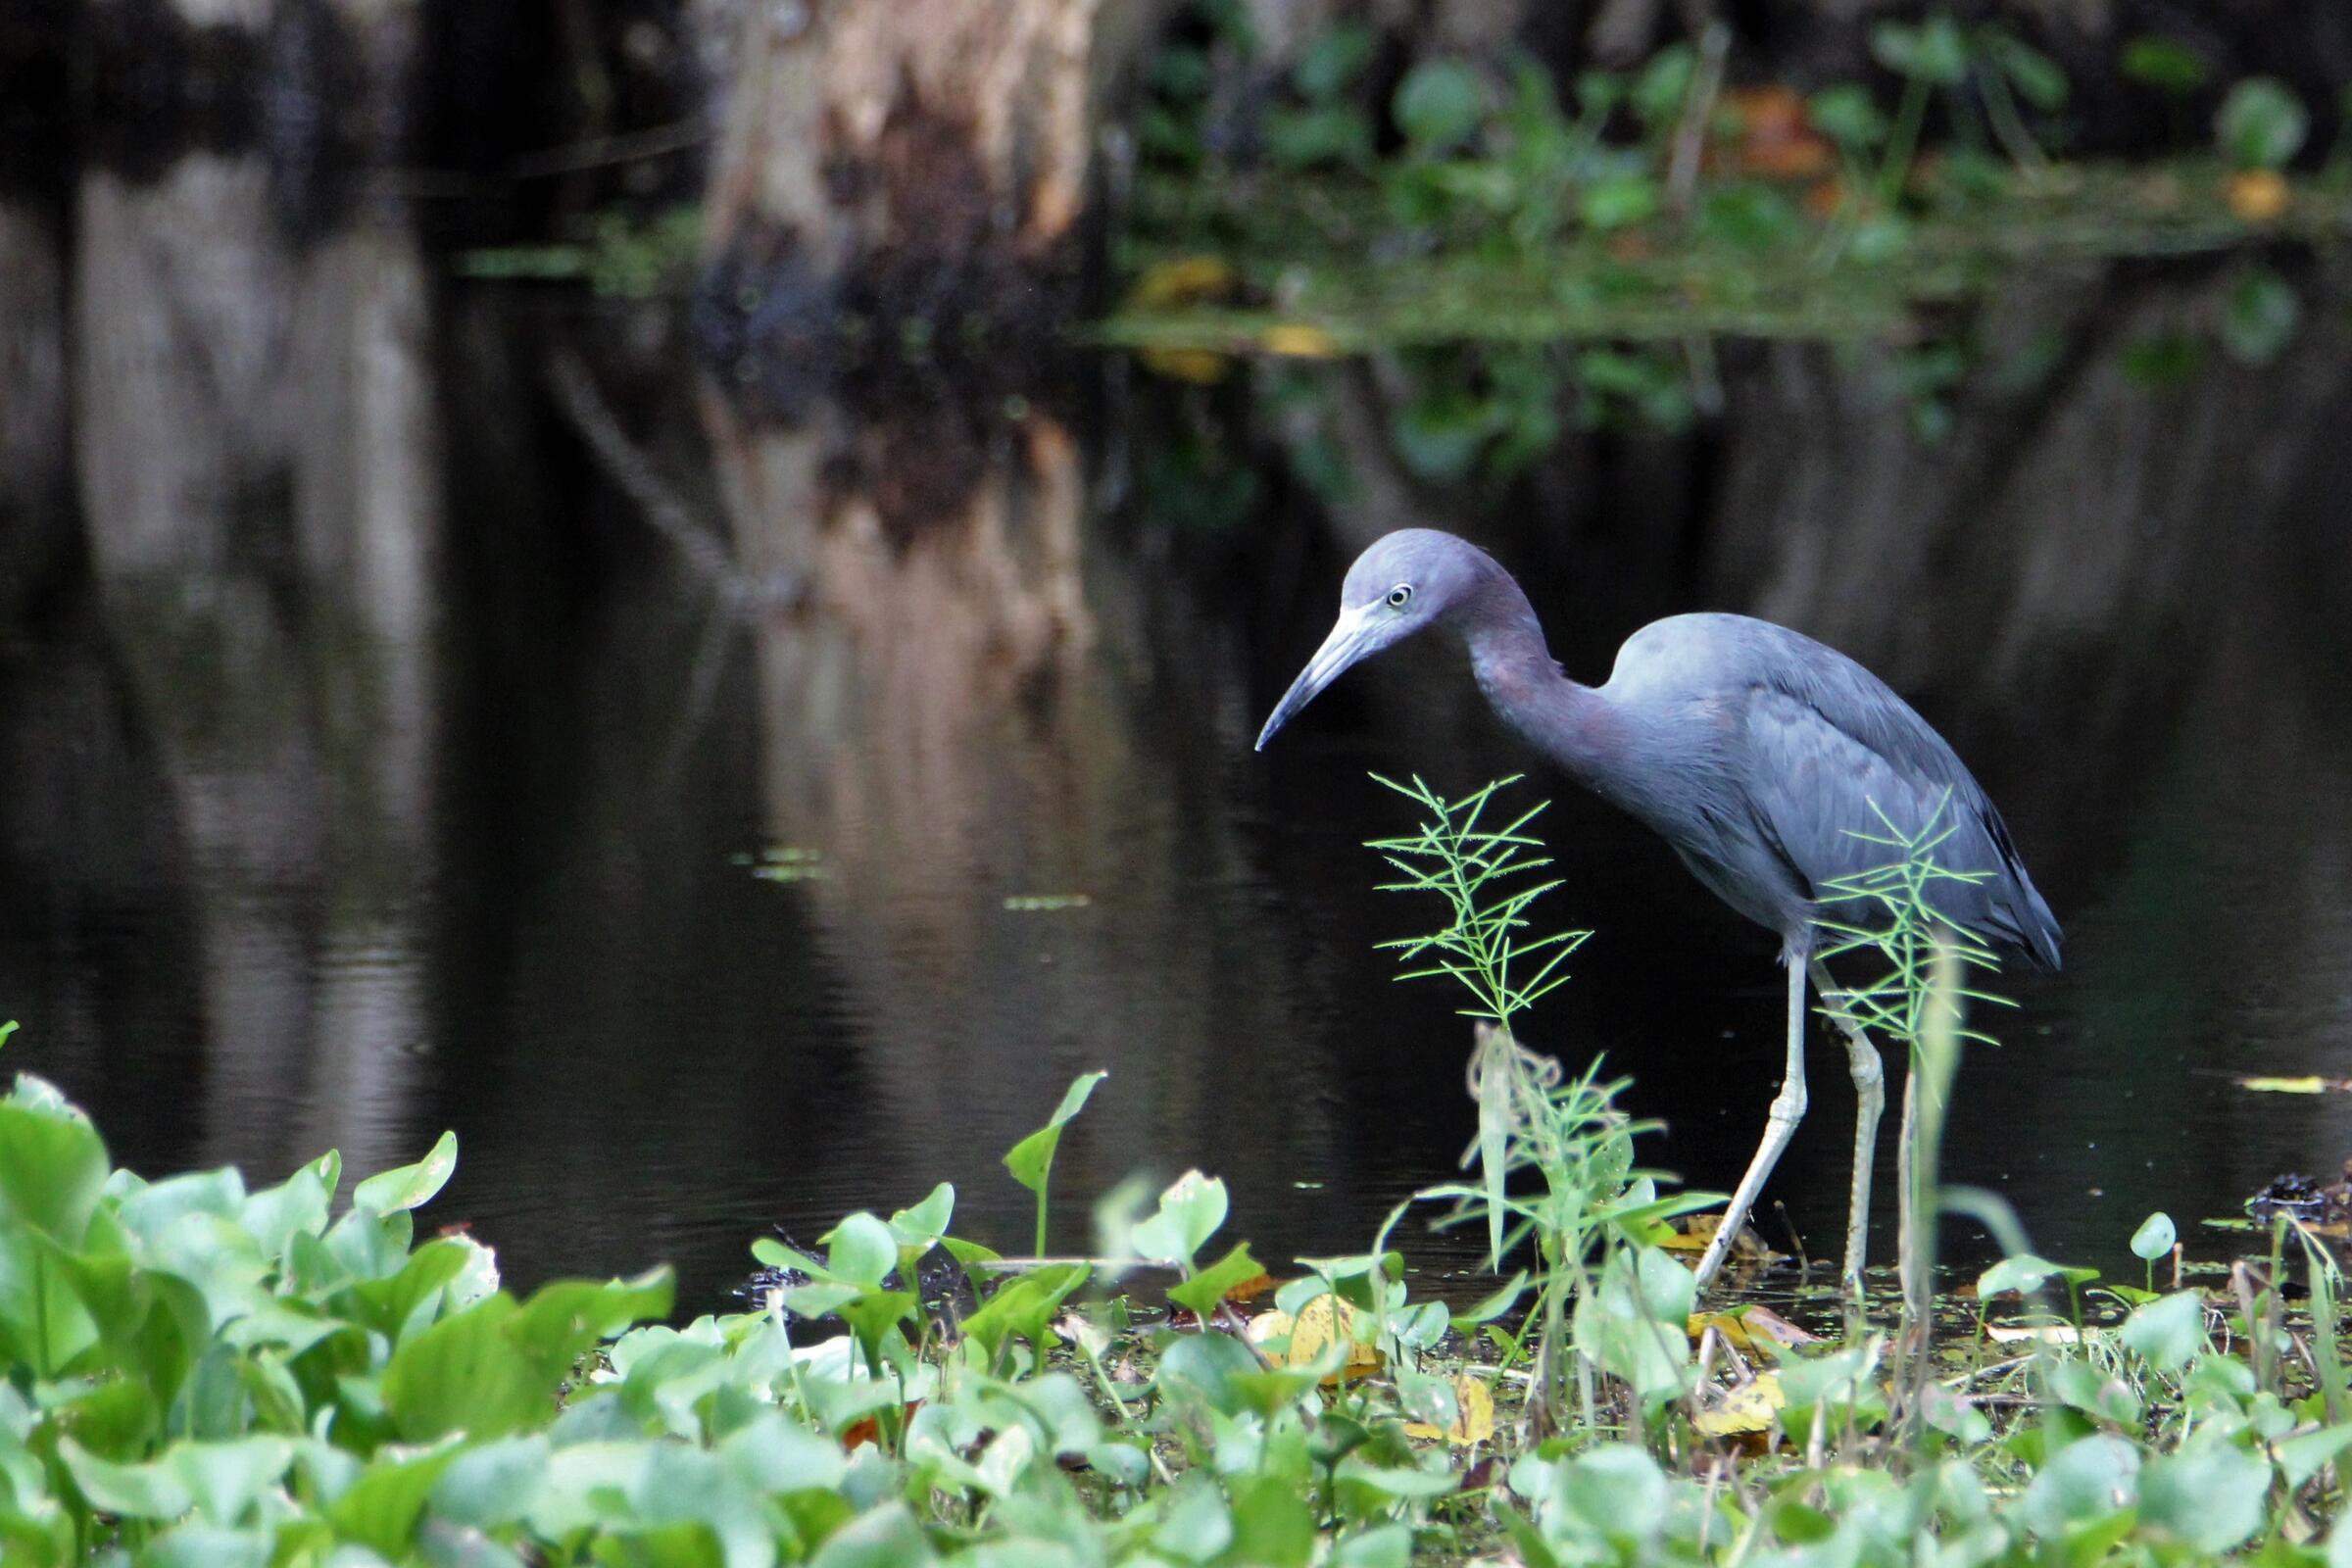 Wading bird in a swamp.